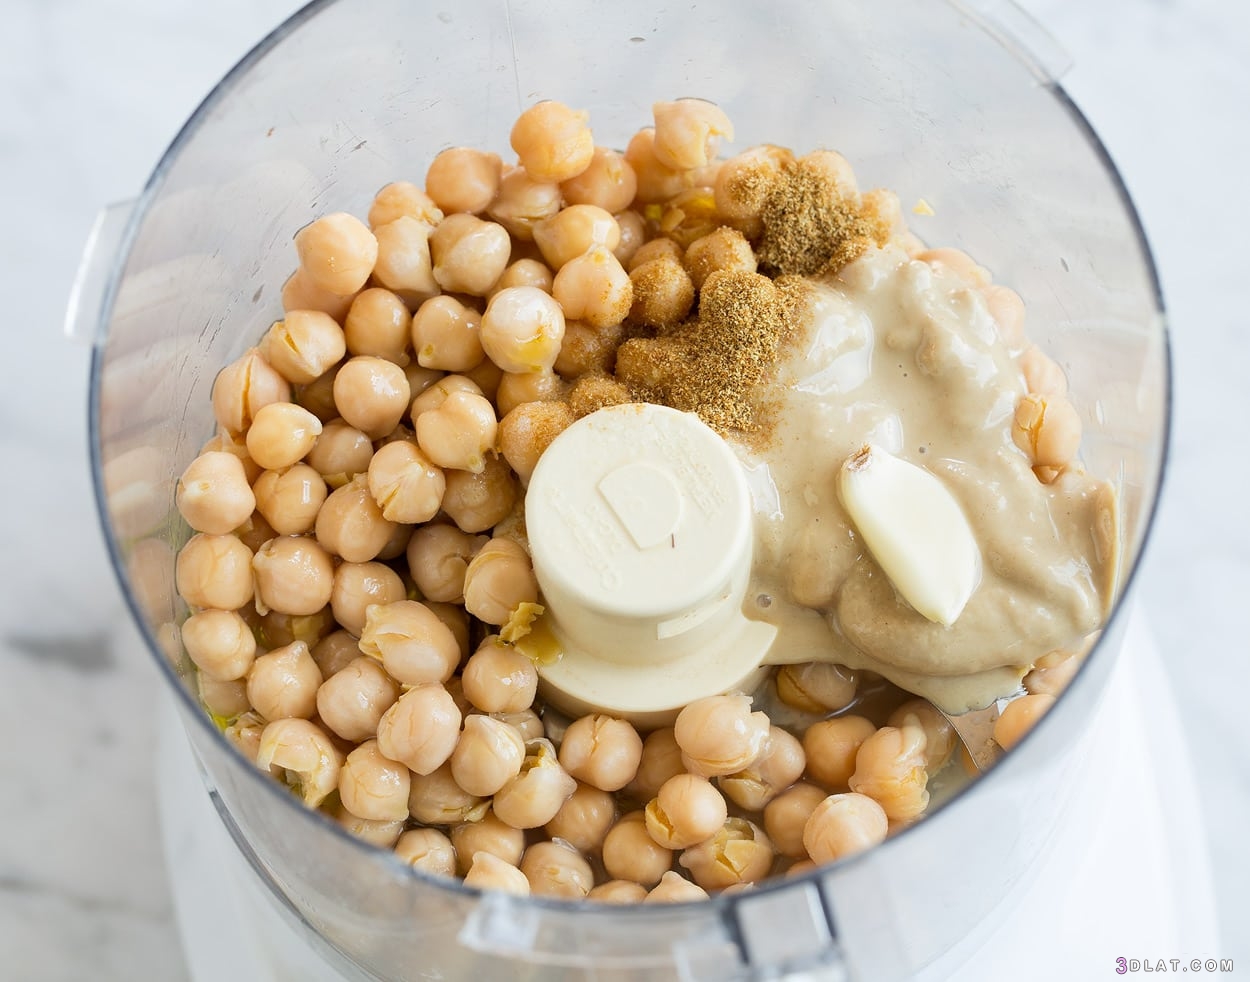 Hummus is a creamy puree of chickpeas and tahini (sesame seed paste) seaso